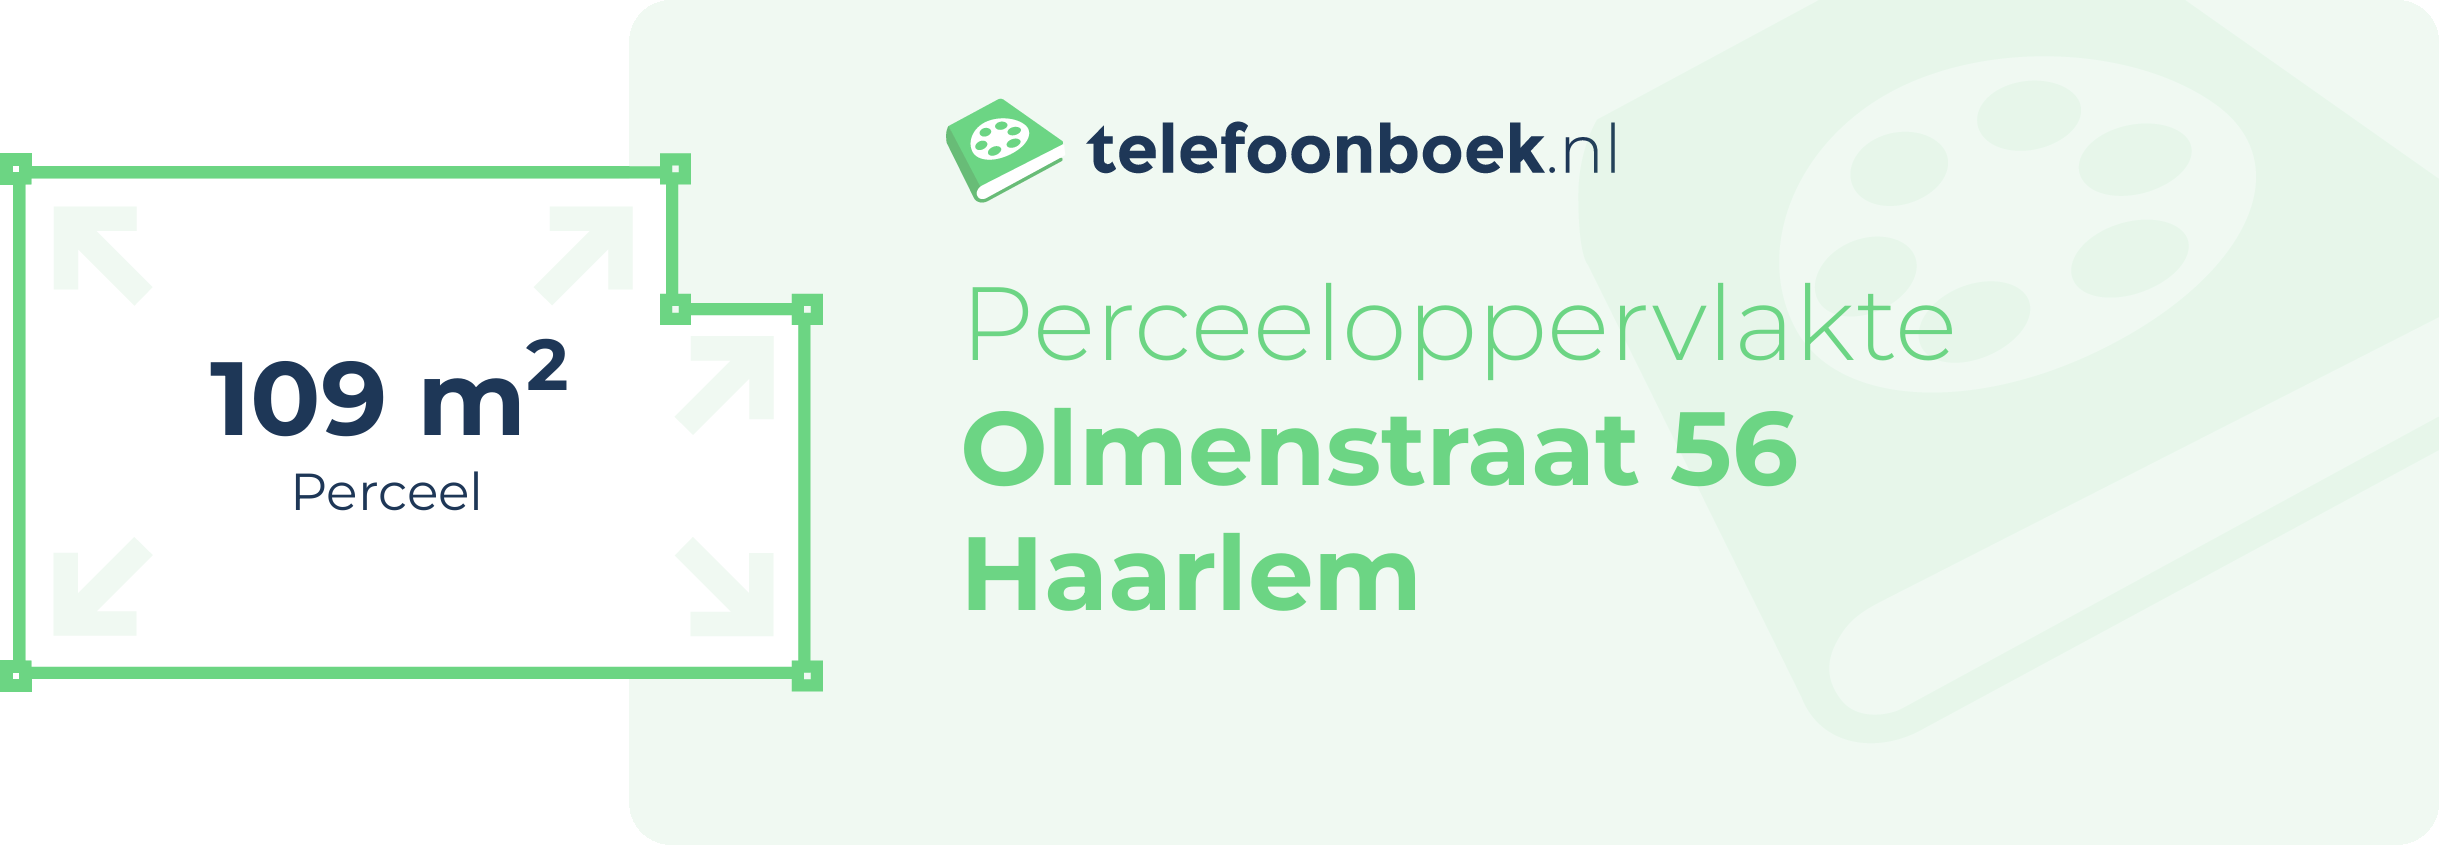 Perceeloppervlakte Olmenstraat 56 Haarlem